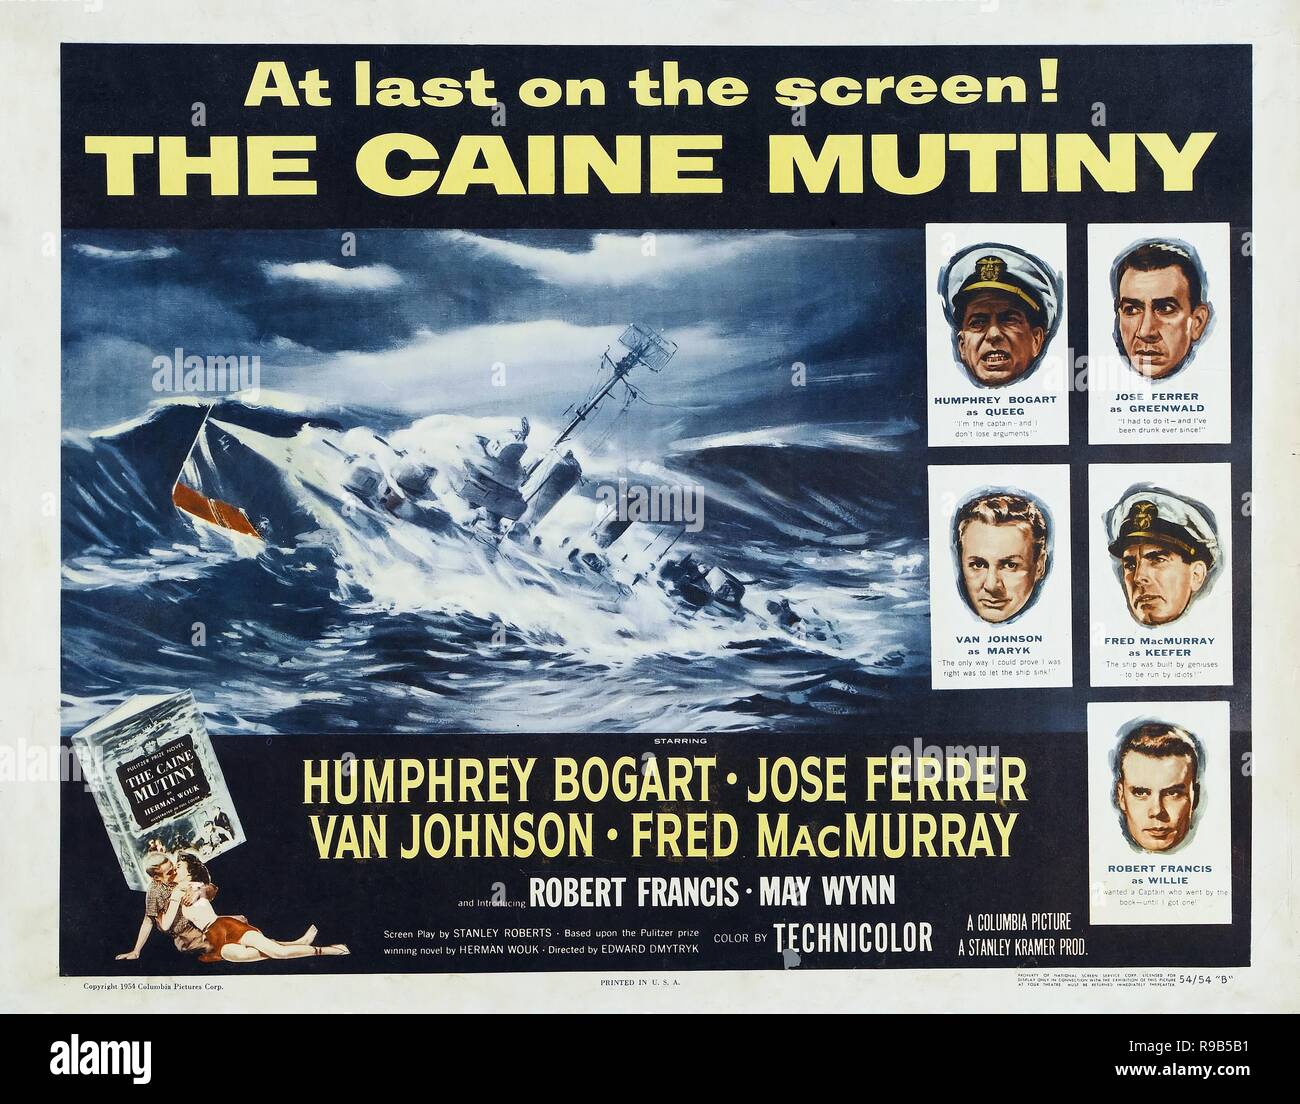 Original film title THE CAINE MUTINY. English title THE CAINE MUTINY